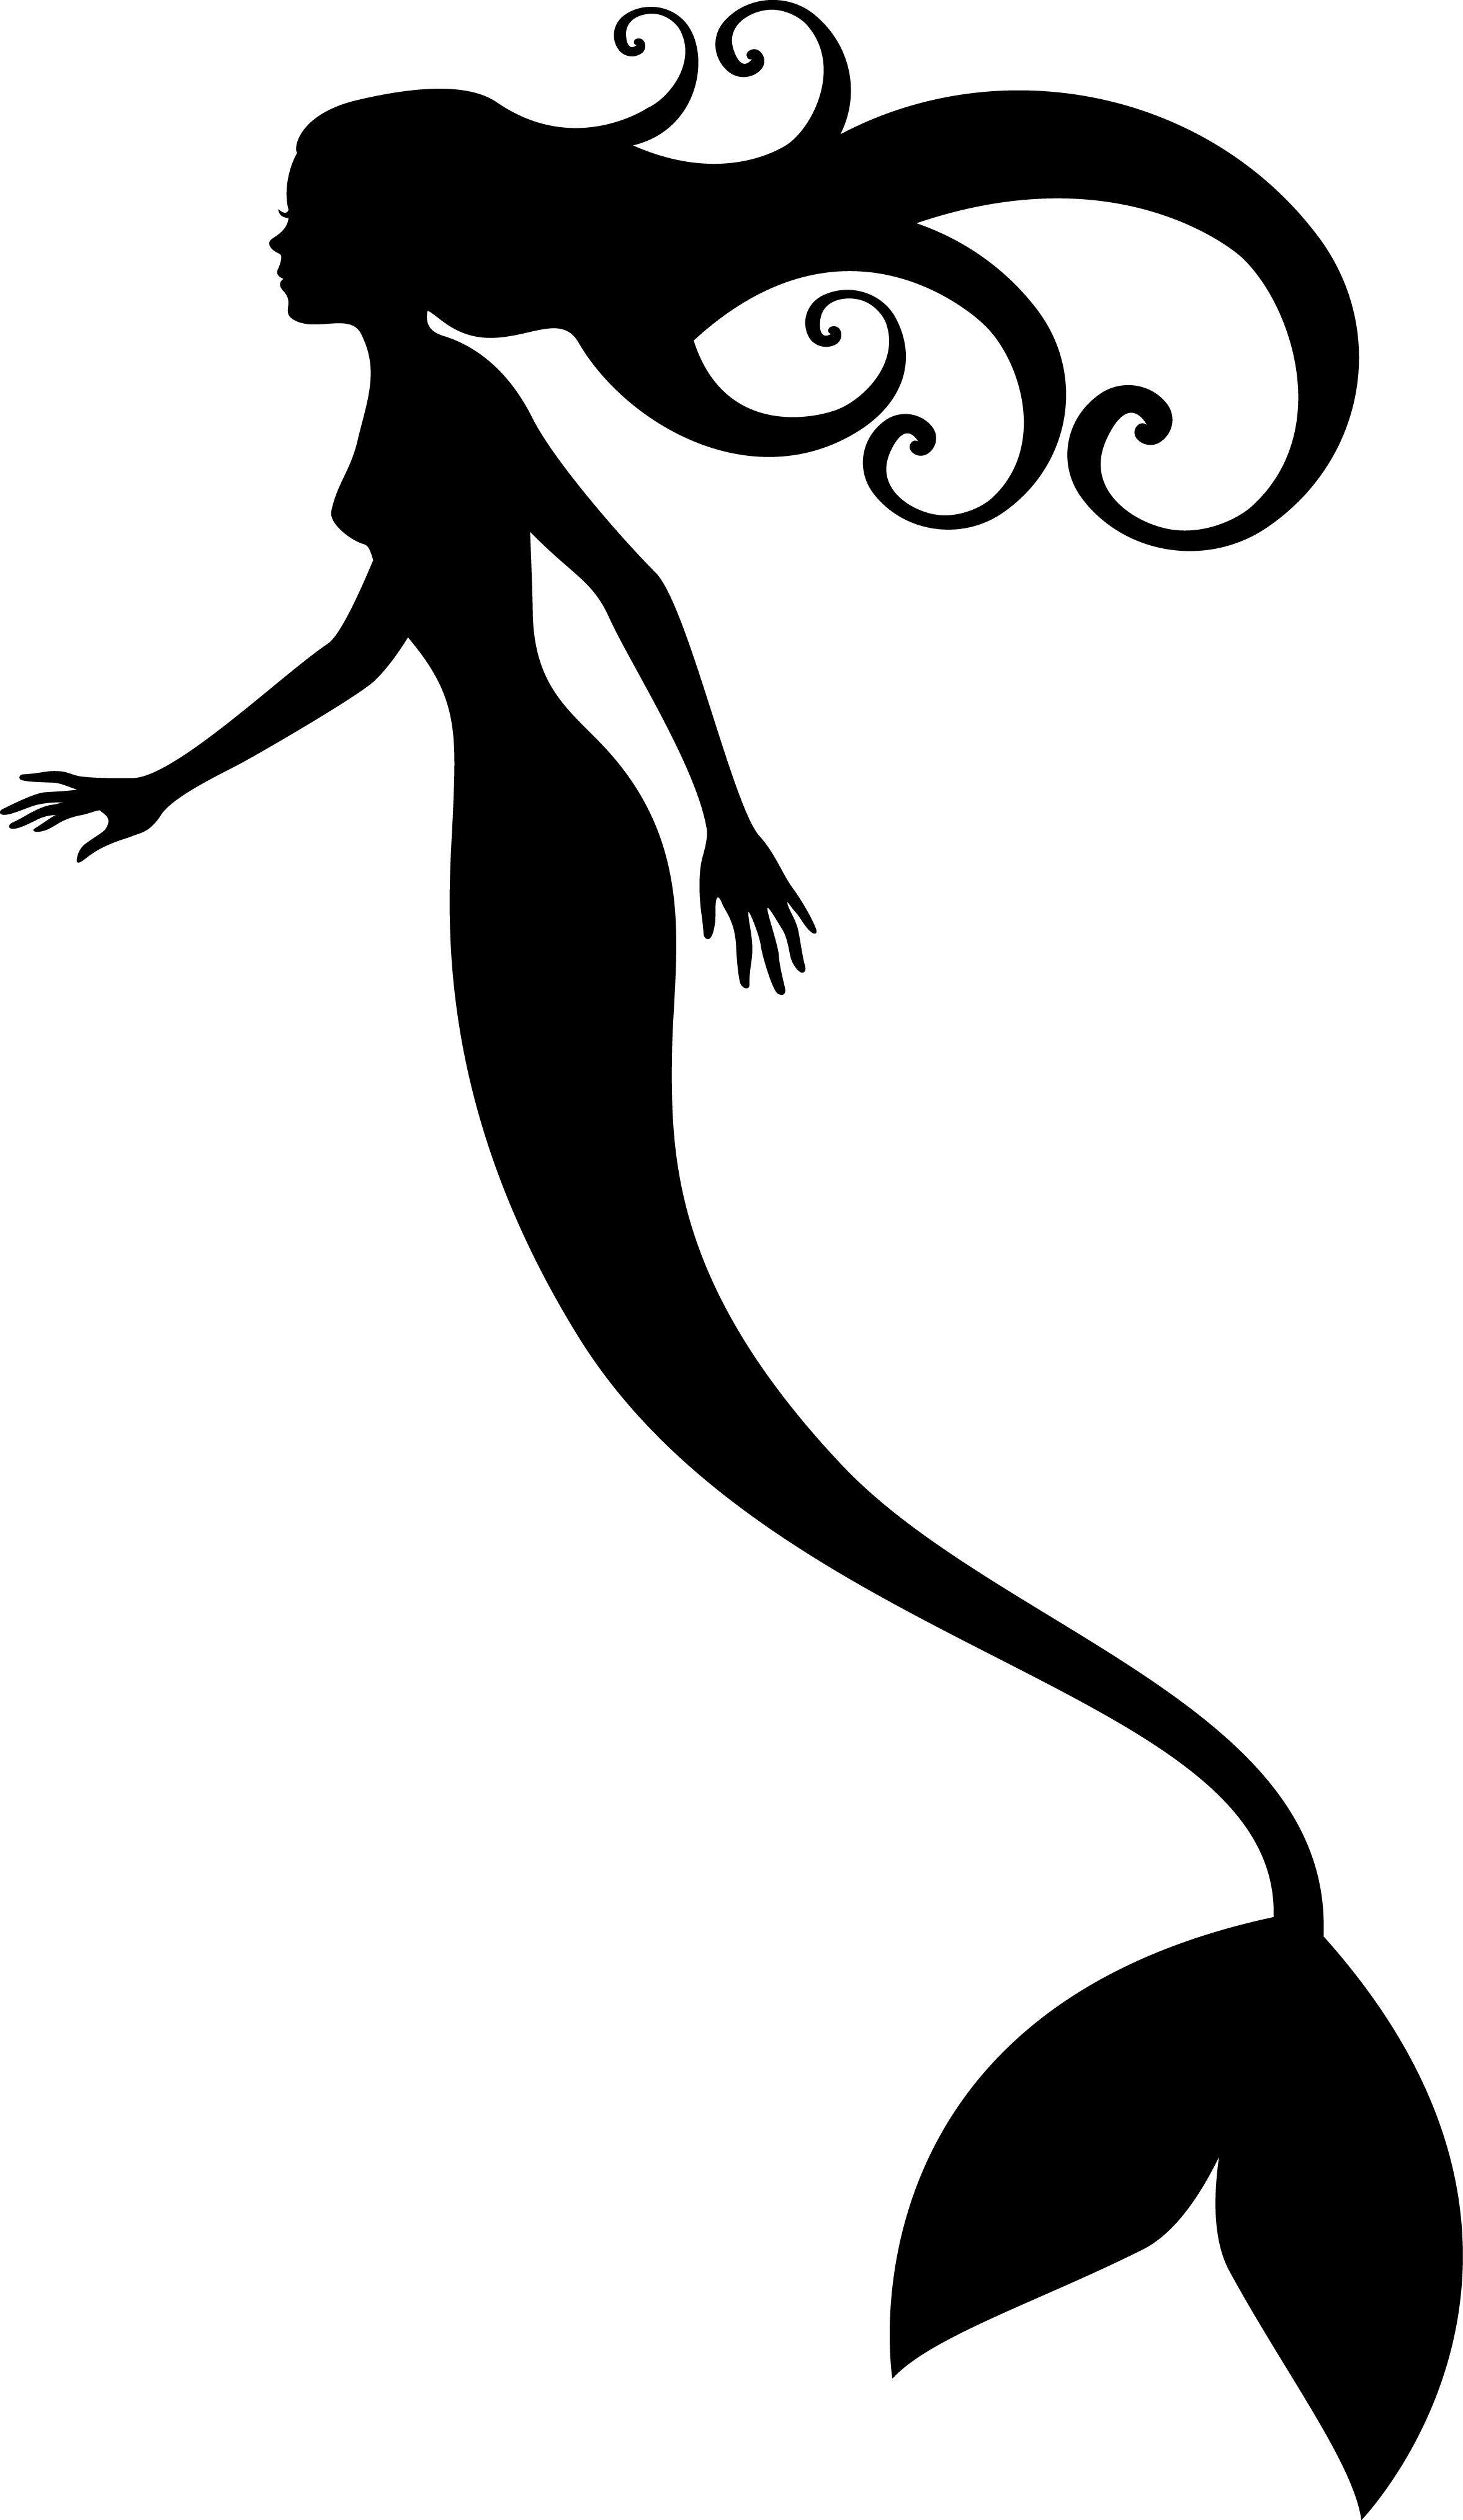 Black and Wight Mermaid Logo - Black And White Mermaid Clip Art. MermaidHiRes. Stencil designs